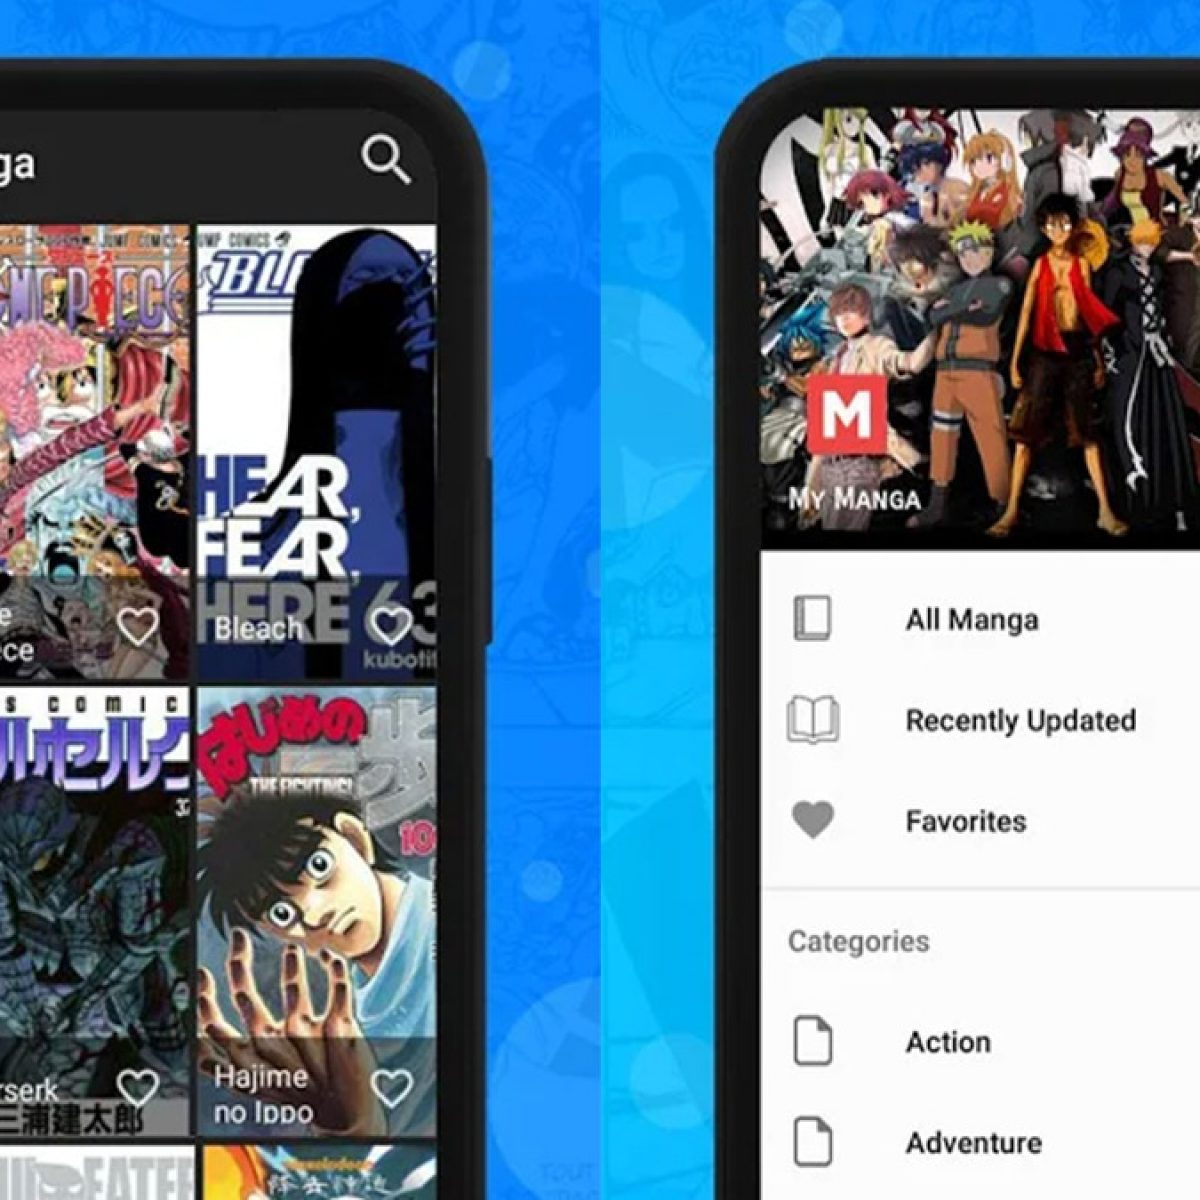 Anitube: anime,manga & comics on the App Store